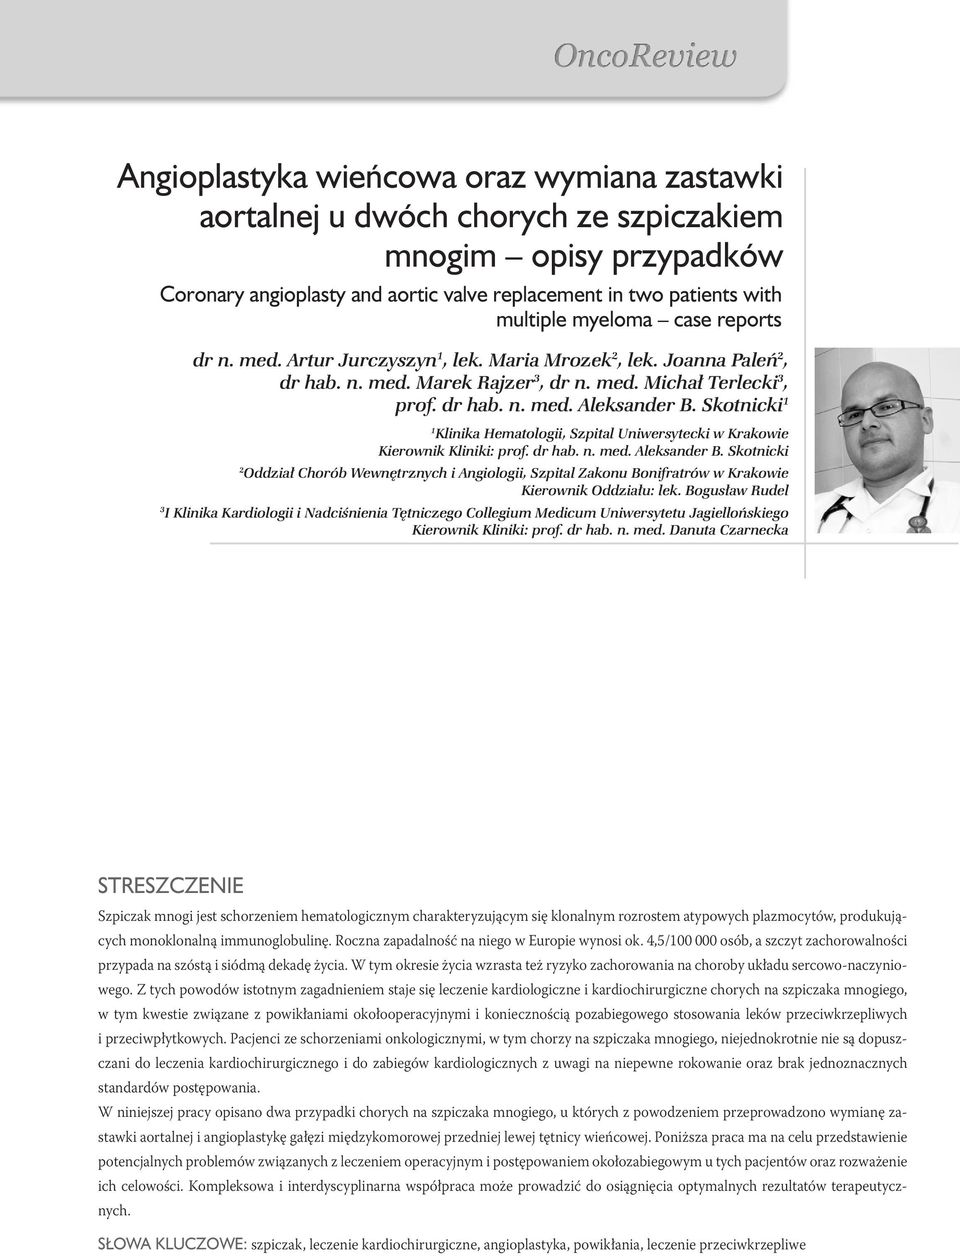 Skotnicki 1 1 Klinika Hematologii, Szpital Uniwersytecki w Krakowie Kierownik Kliniki: prof. dr hab. n. med. Aleksander B.